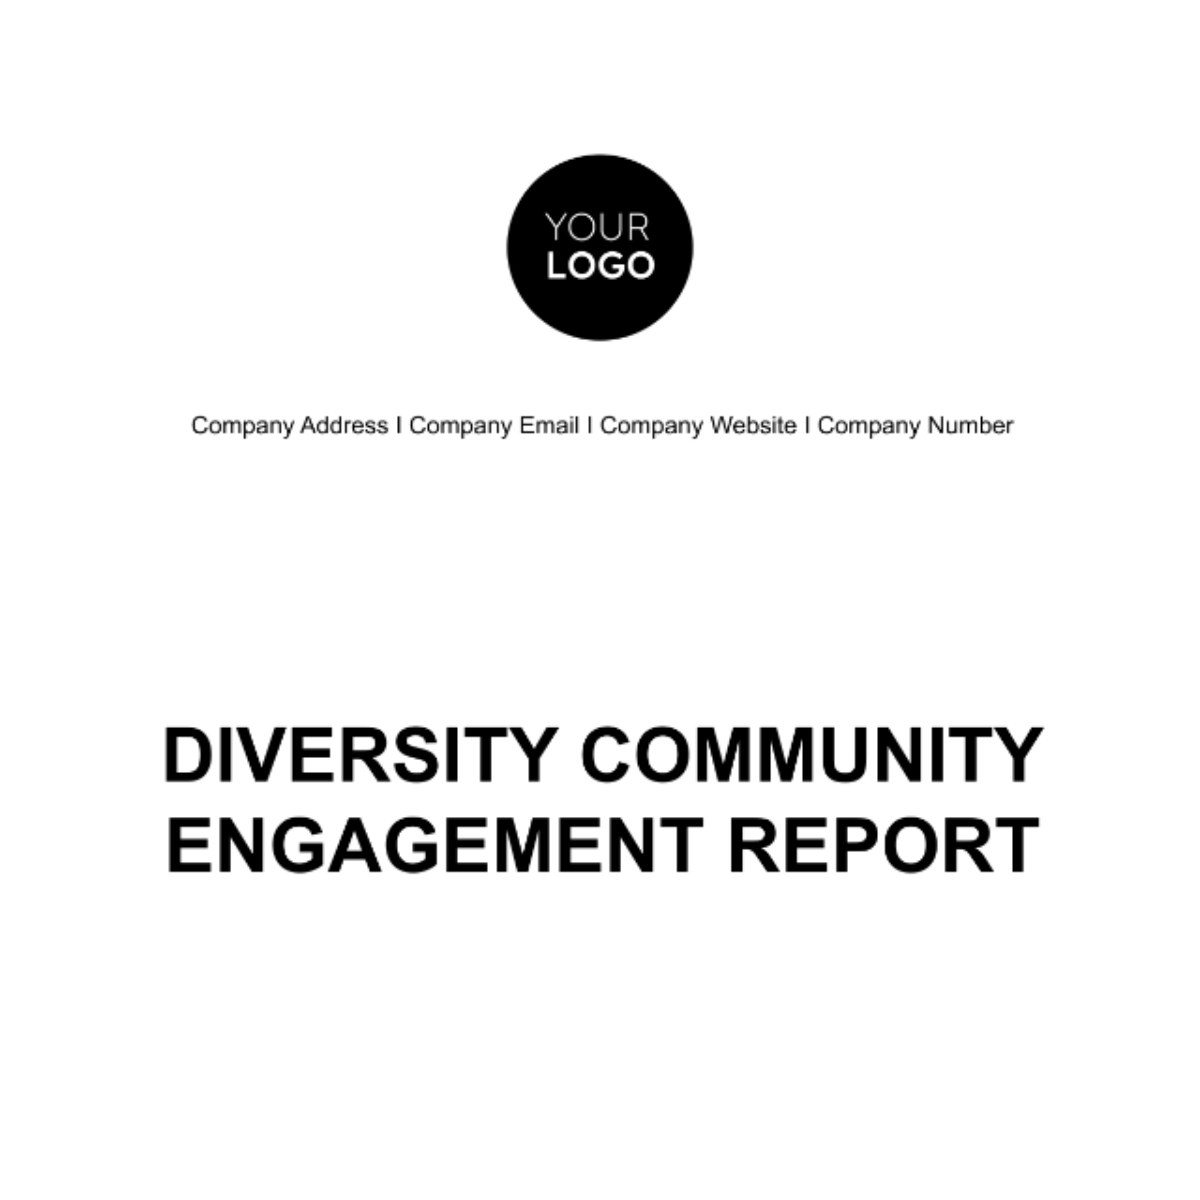 Free Diversity Community Engagement Report HR Template